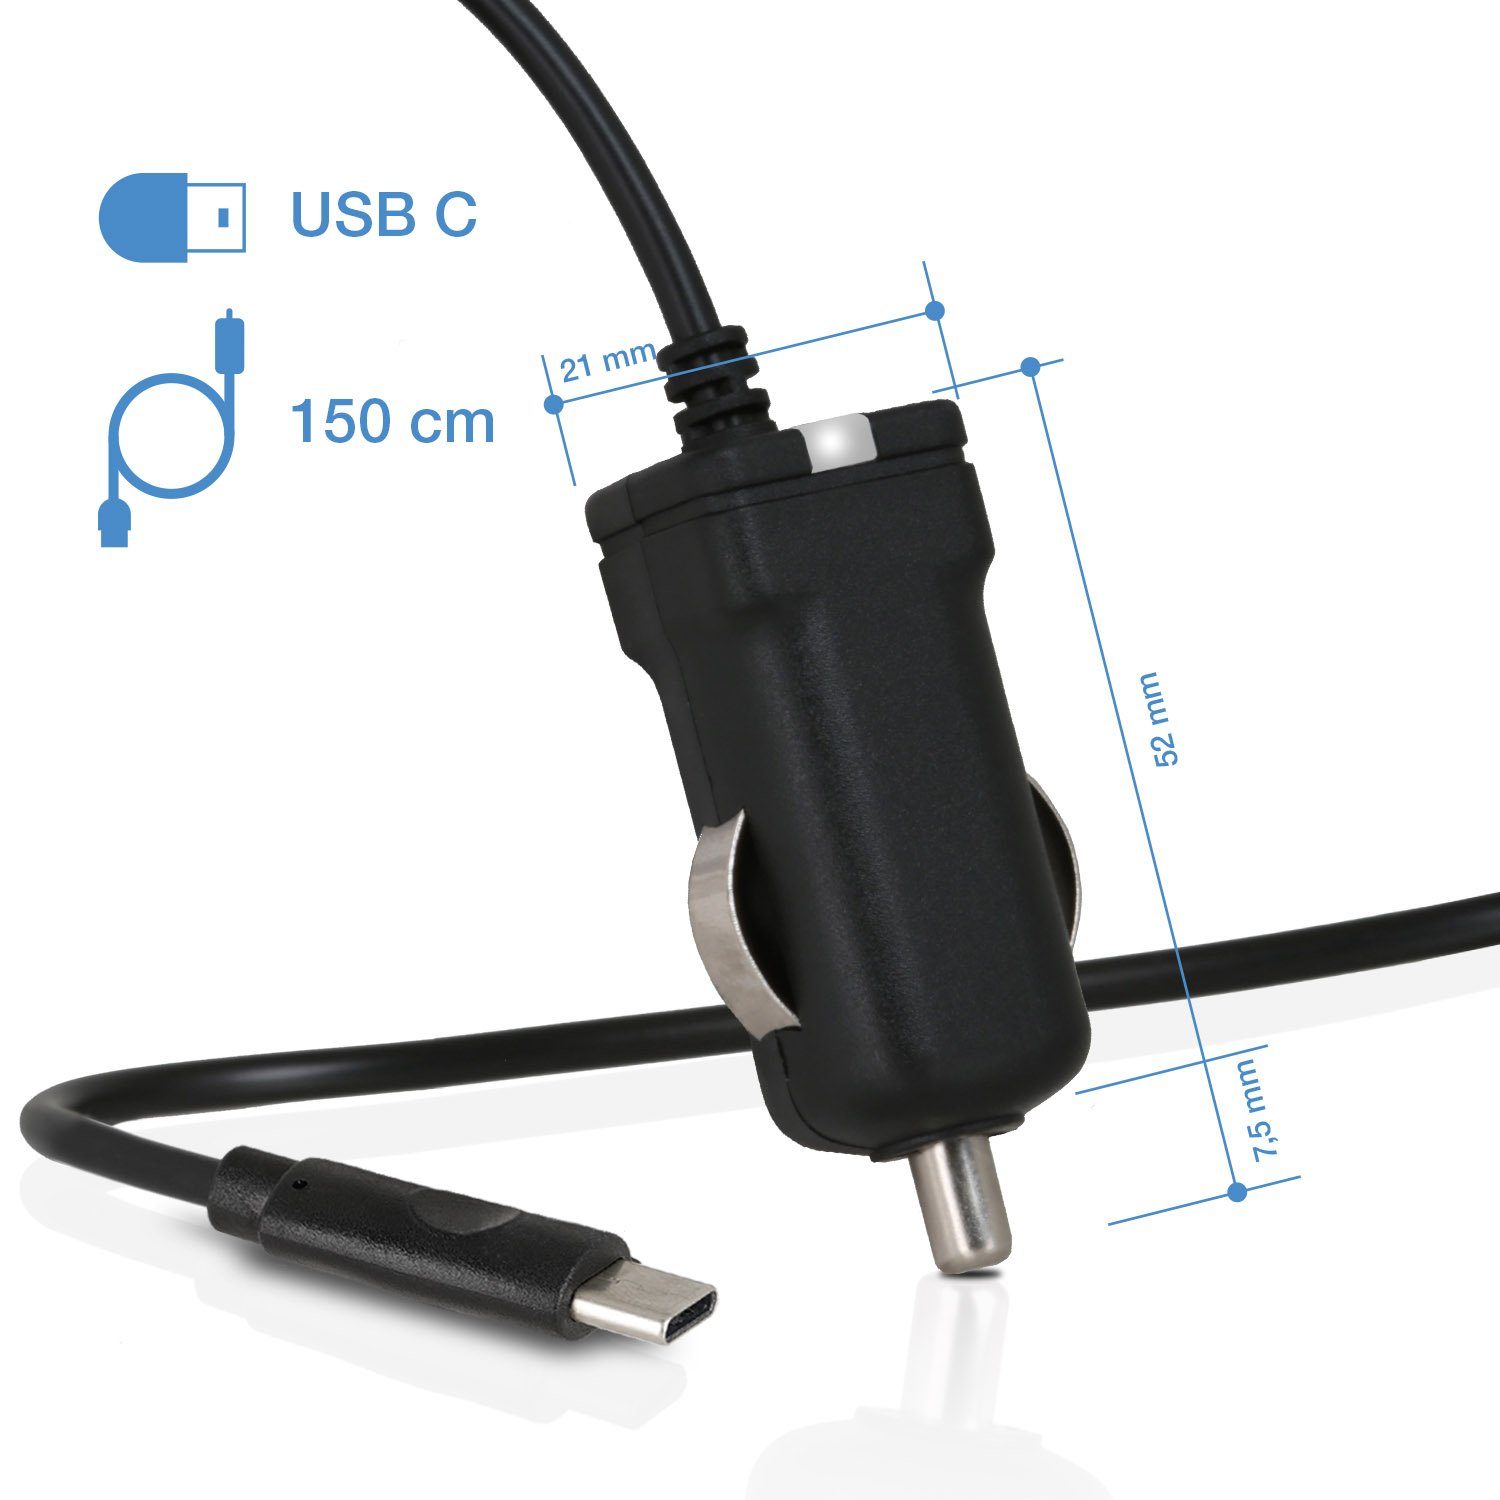 Wicked Chili 1,5m KFZ USB-C Auto-Adapter Stecker kompatib (150cm, Huawei für Xiaomi LED Typ Ladegerät Ladekabel 150 zu KFZ Licht, Samsung cm, 2.4A) USB Zigarettenanzünder-Stecker C mit USB-C, Sony